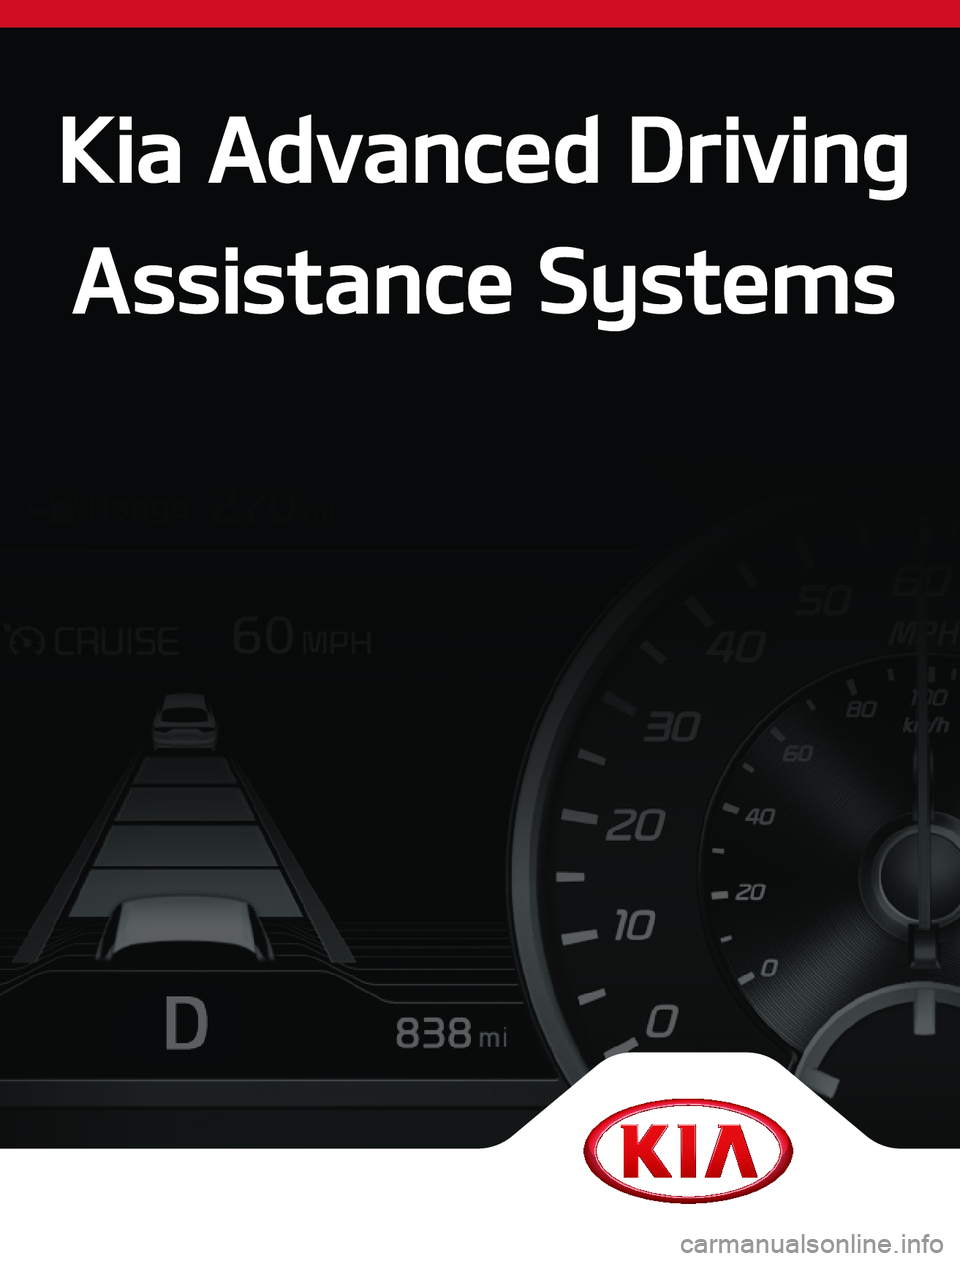 KIA NIRO 2020  Advanced Driving Assistance System Kia Advanced Driving 
Assistance Systems               